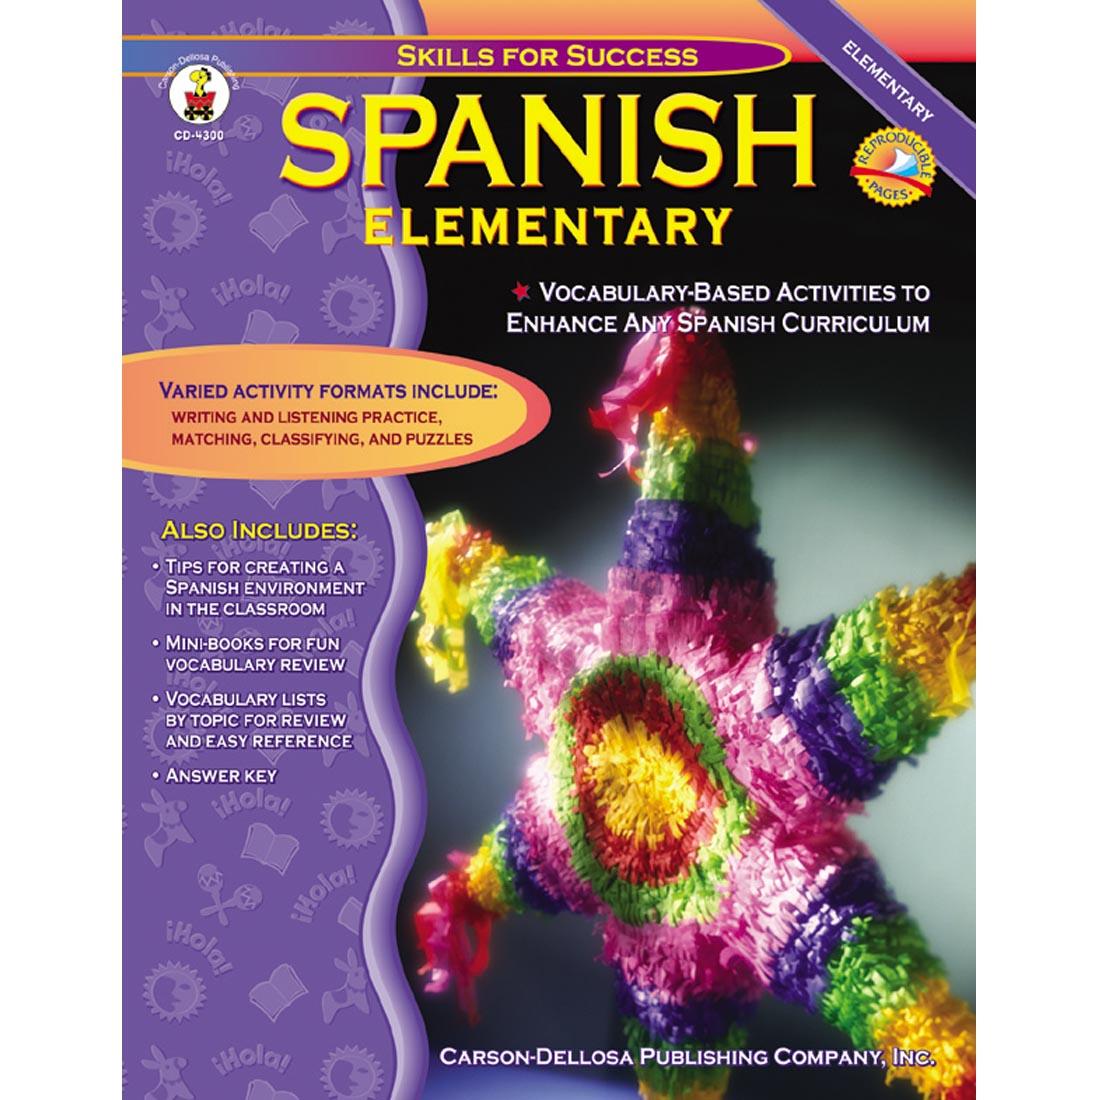 Spanish Elementary Skills for Success Book by Carson Dellosa